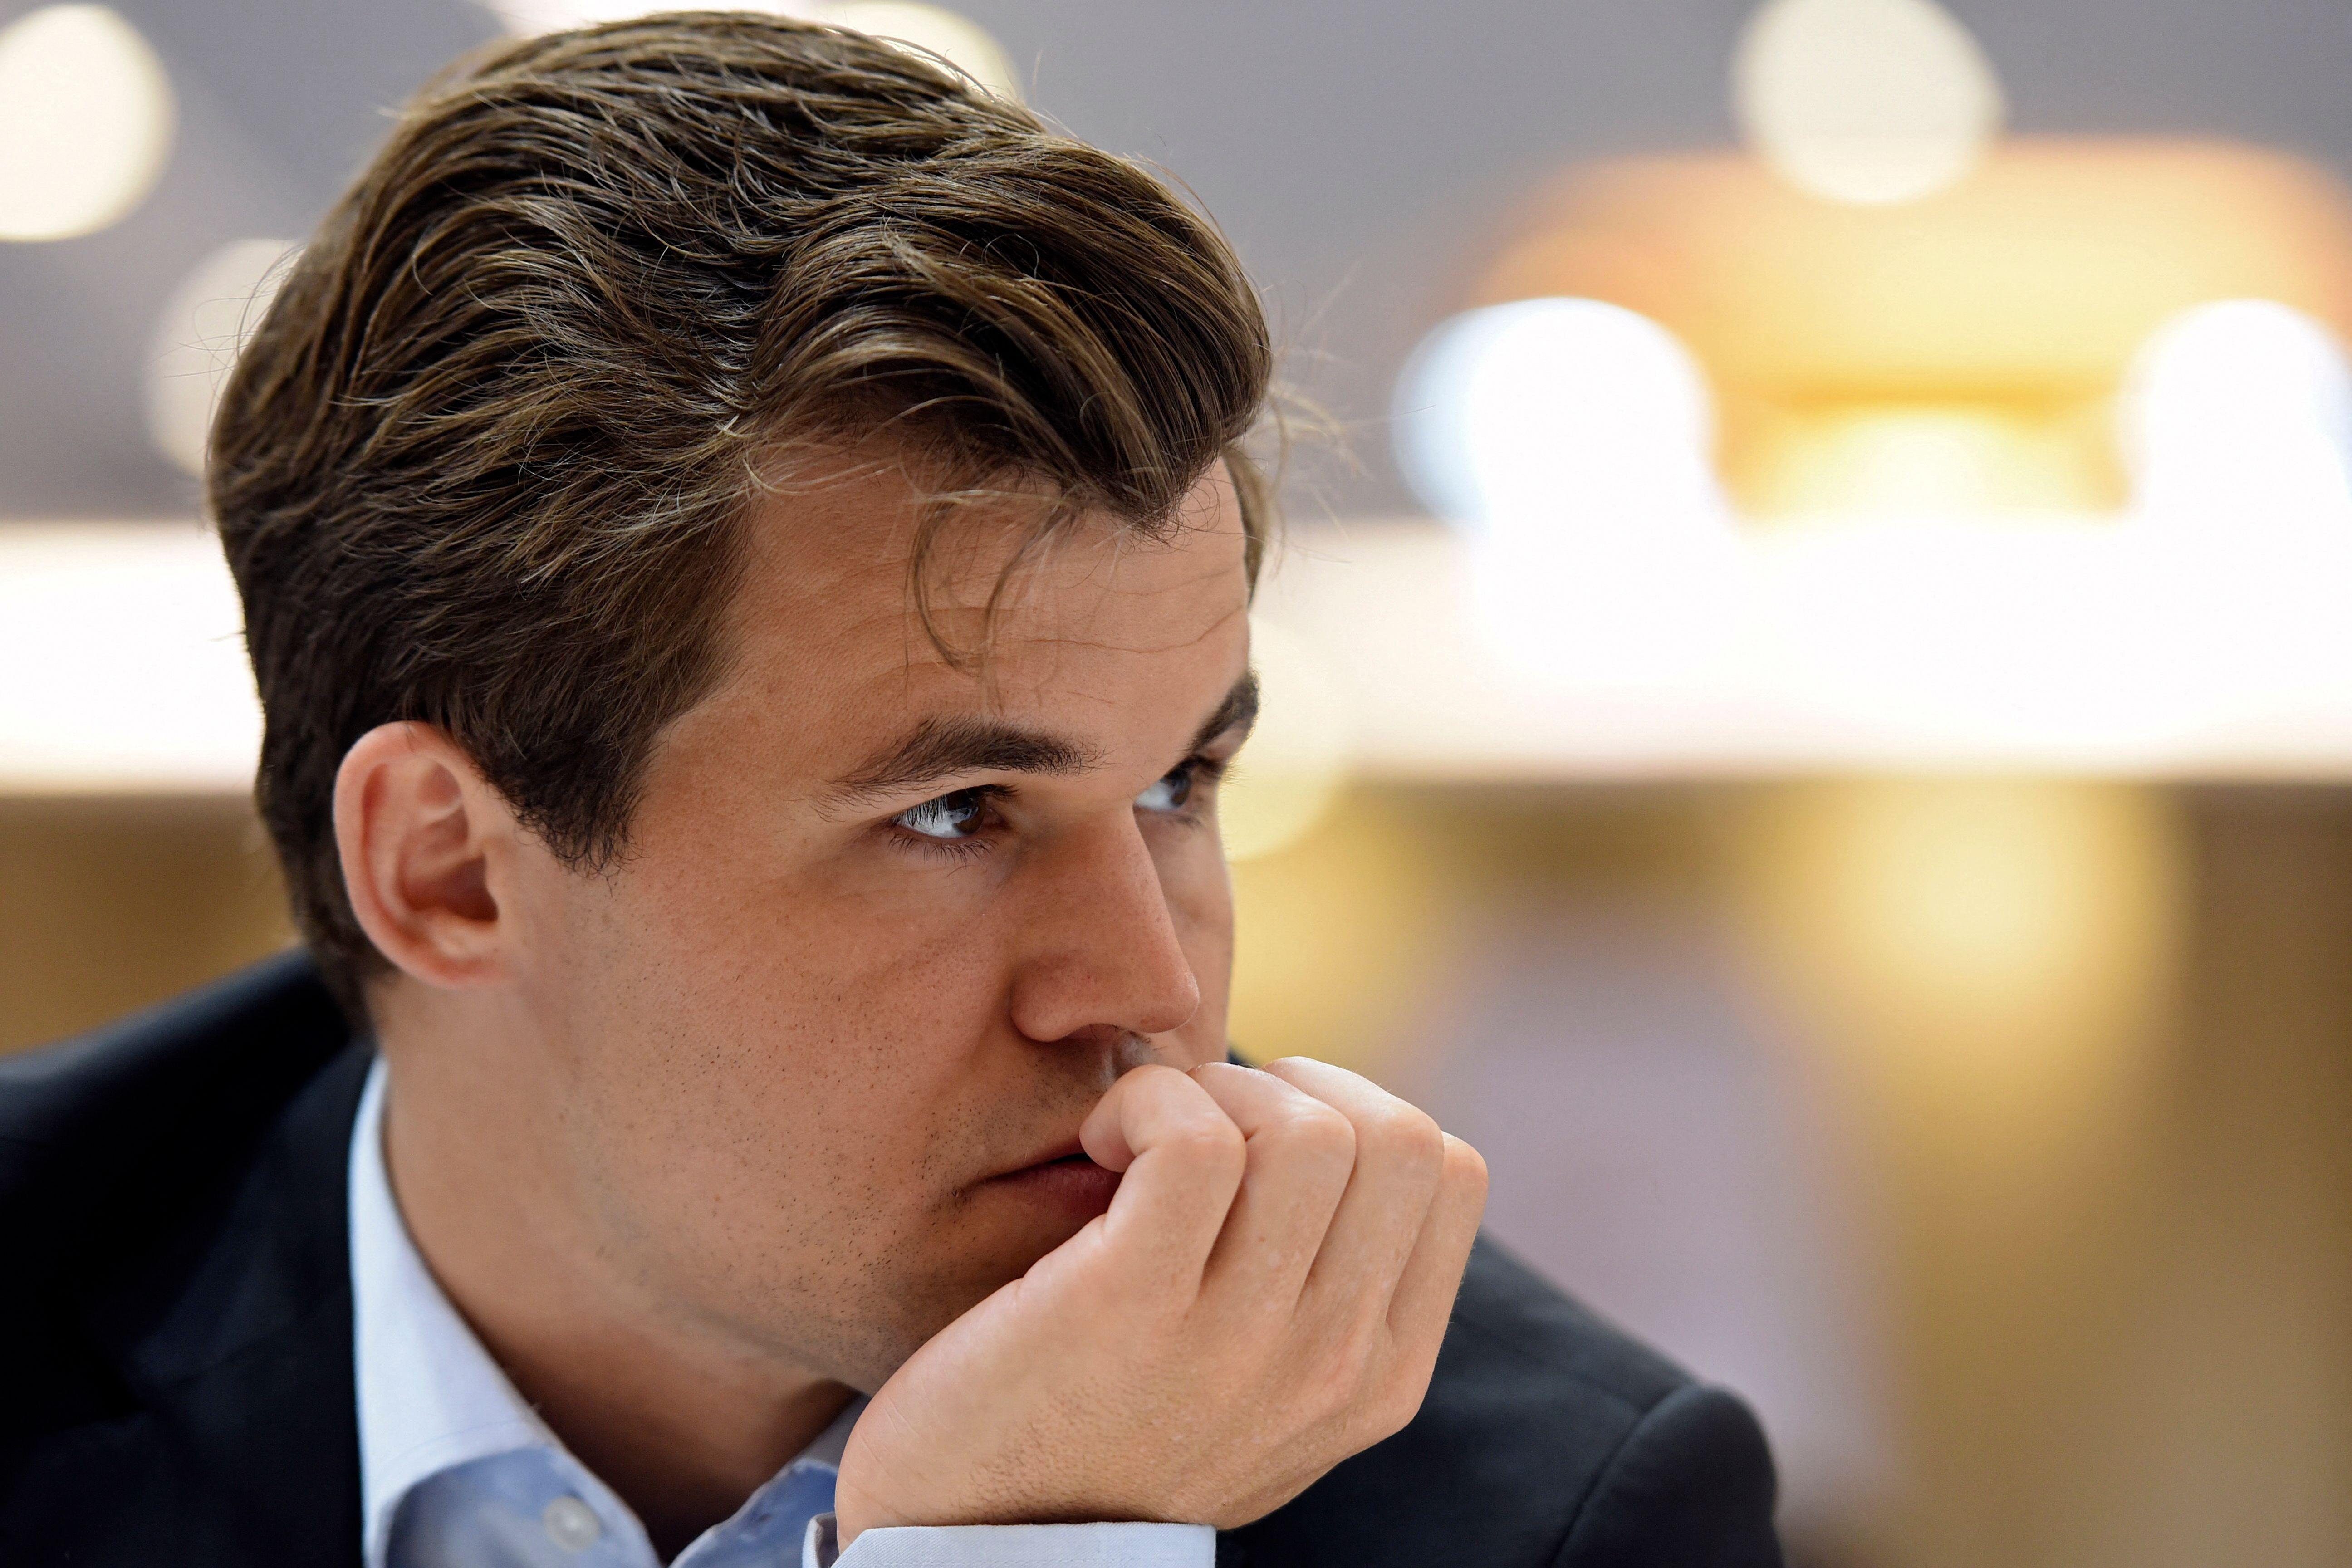 Magnus Carlsen desiste de seu título mundial e substituí-lo não